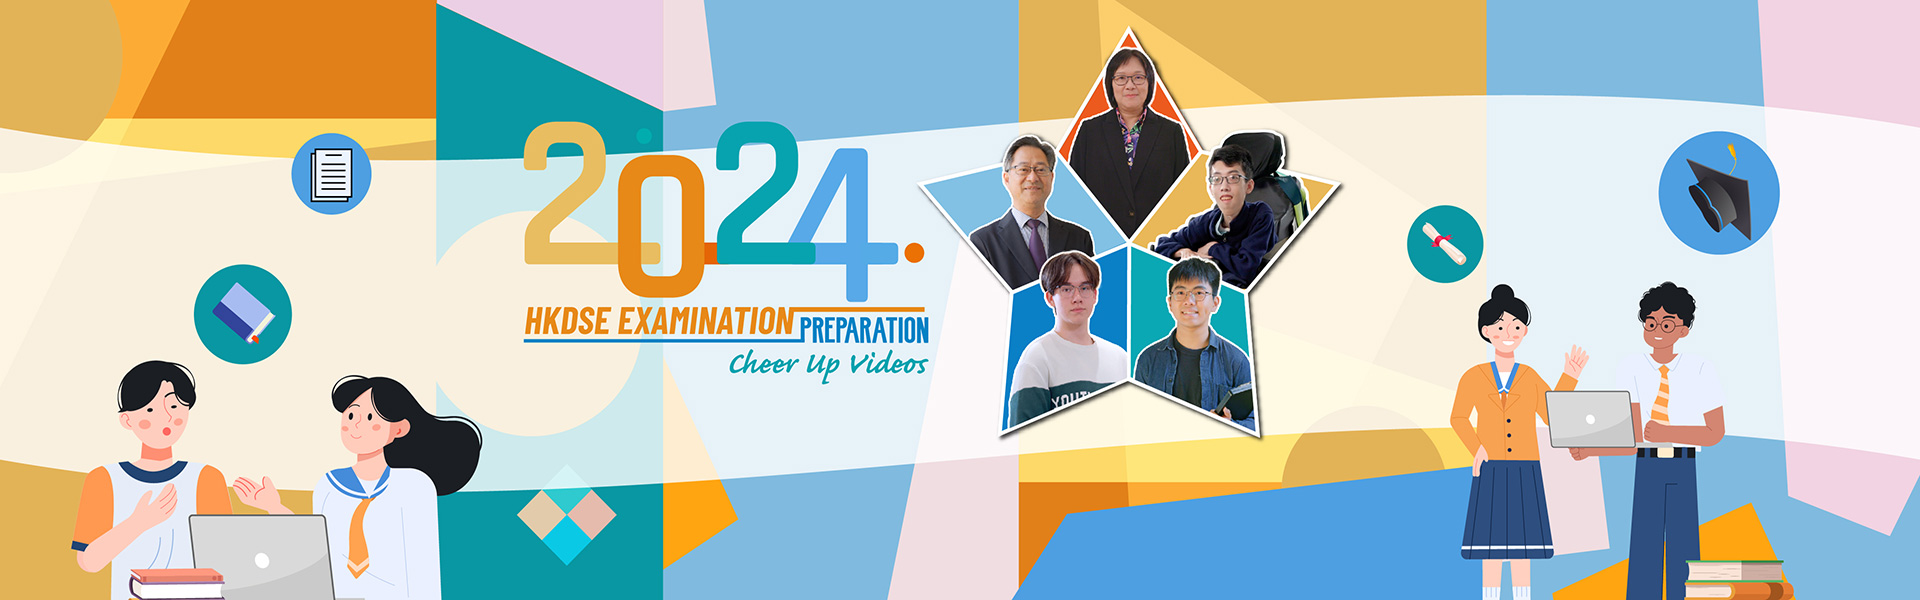 2024 HKDSE Examination Cheer Up Videos – Preparation